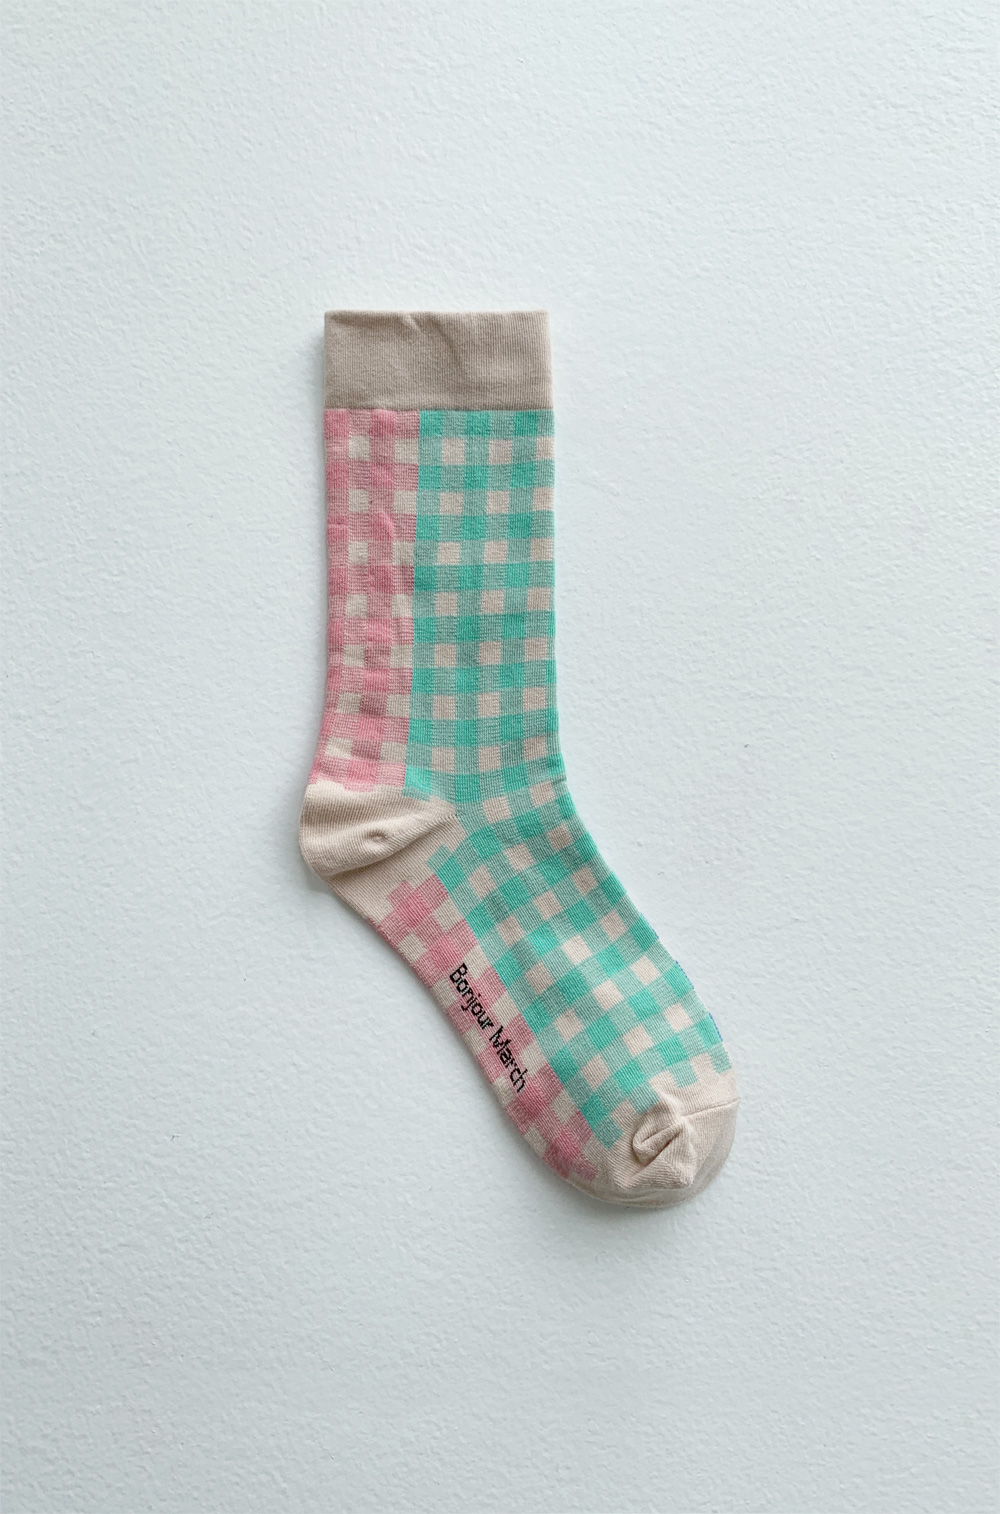 3 color check socks